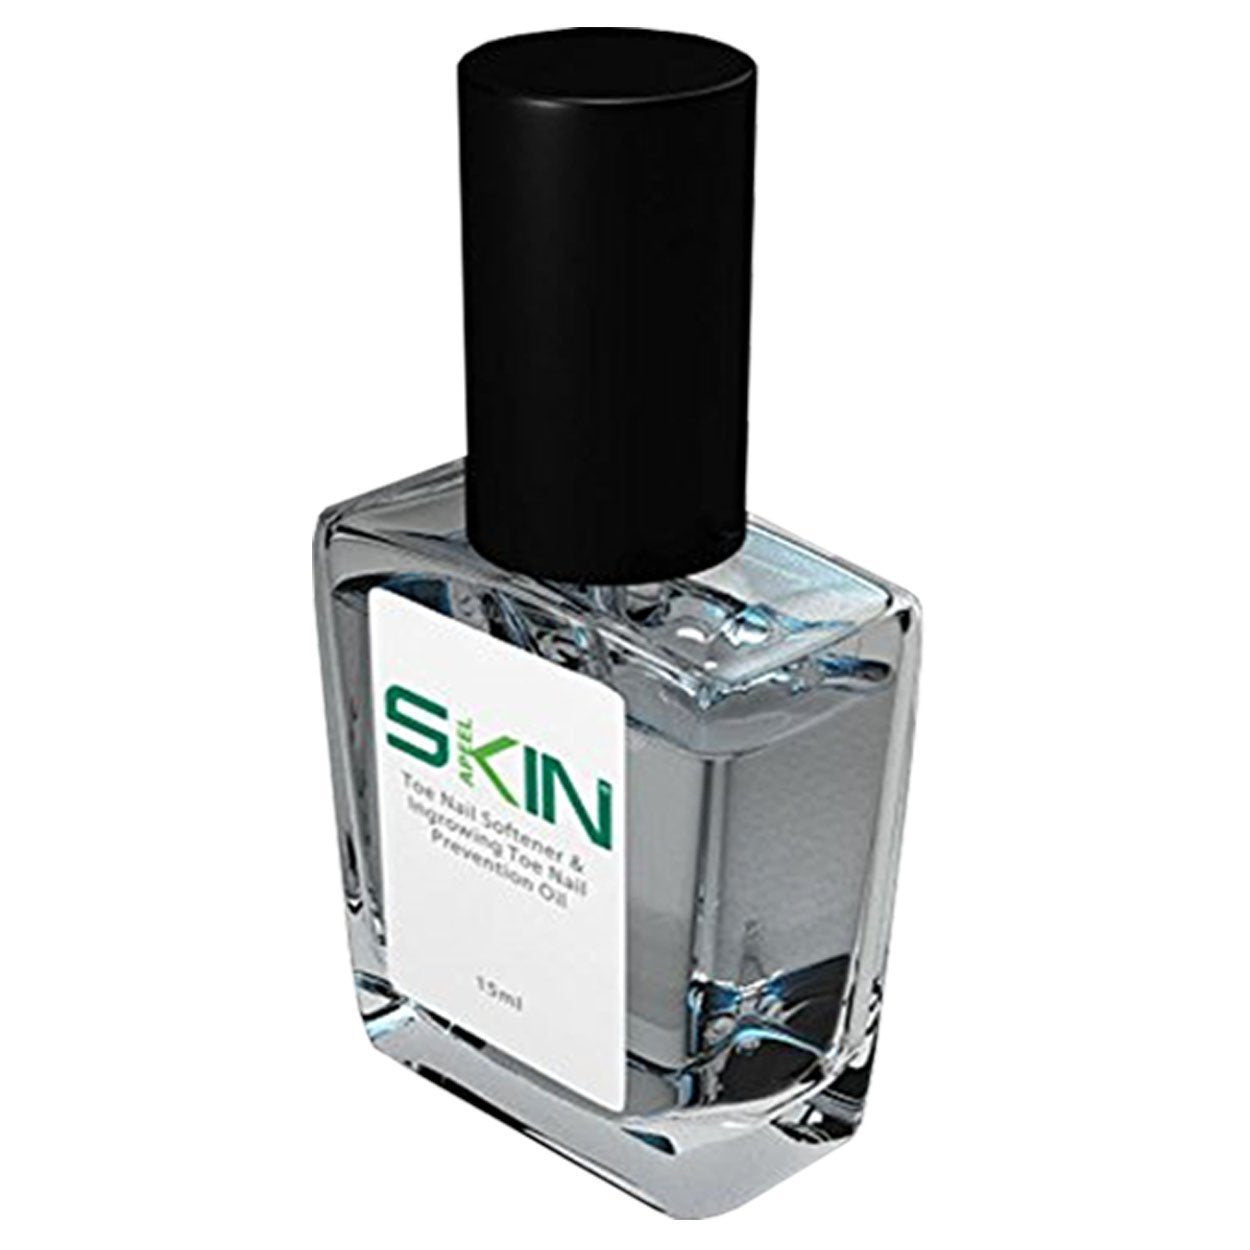 Skinapeel Toe Nail Softener and Ingrowing Toenail Prevention Oil 15ml